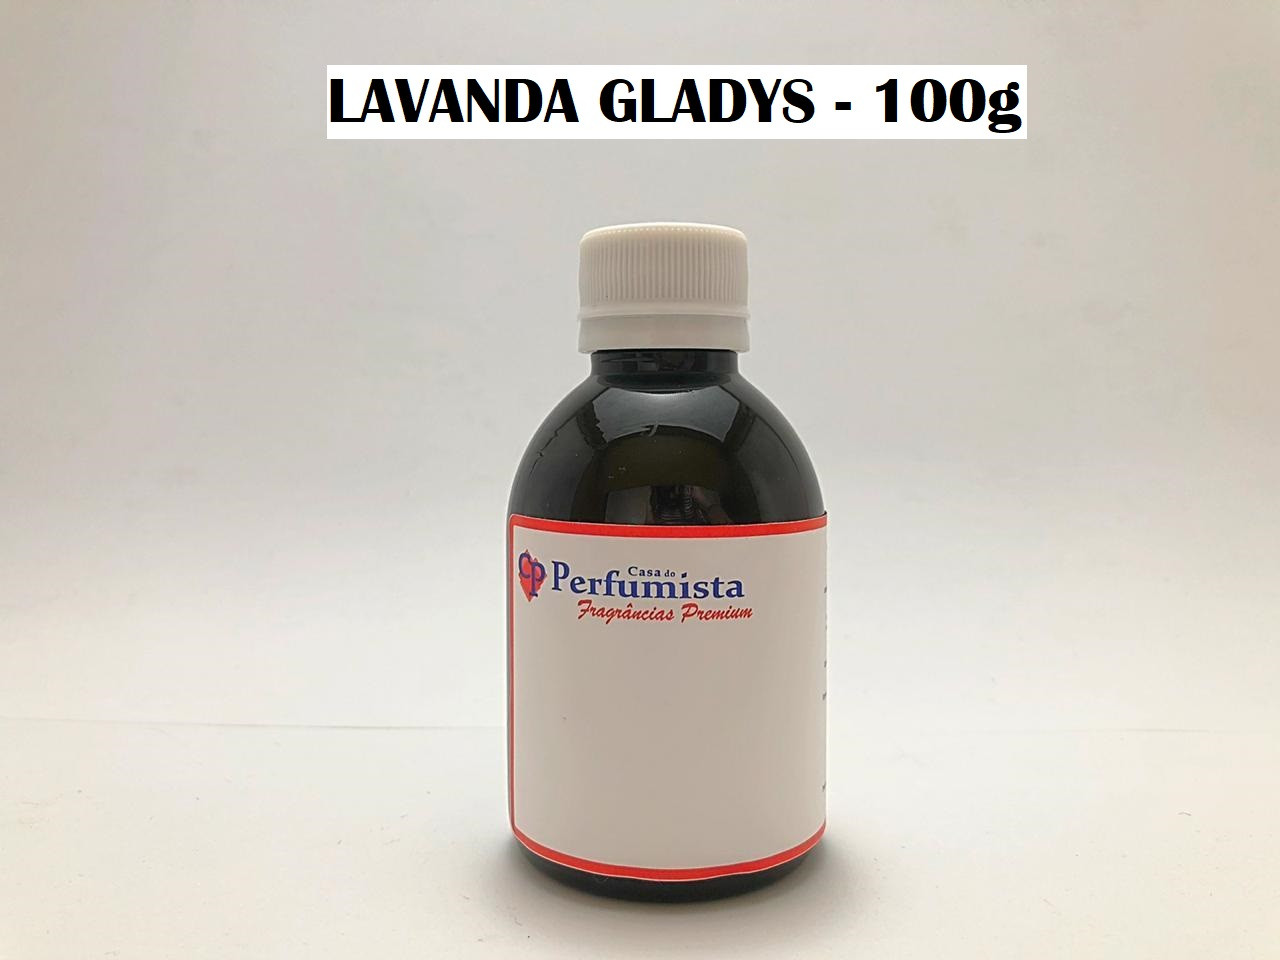 LAVANDA GLADYS - 100g